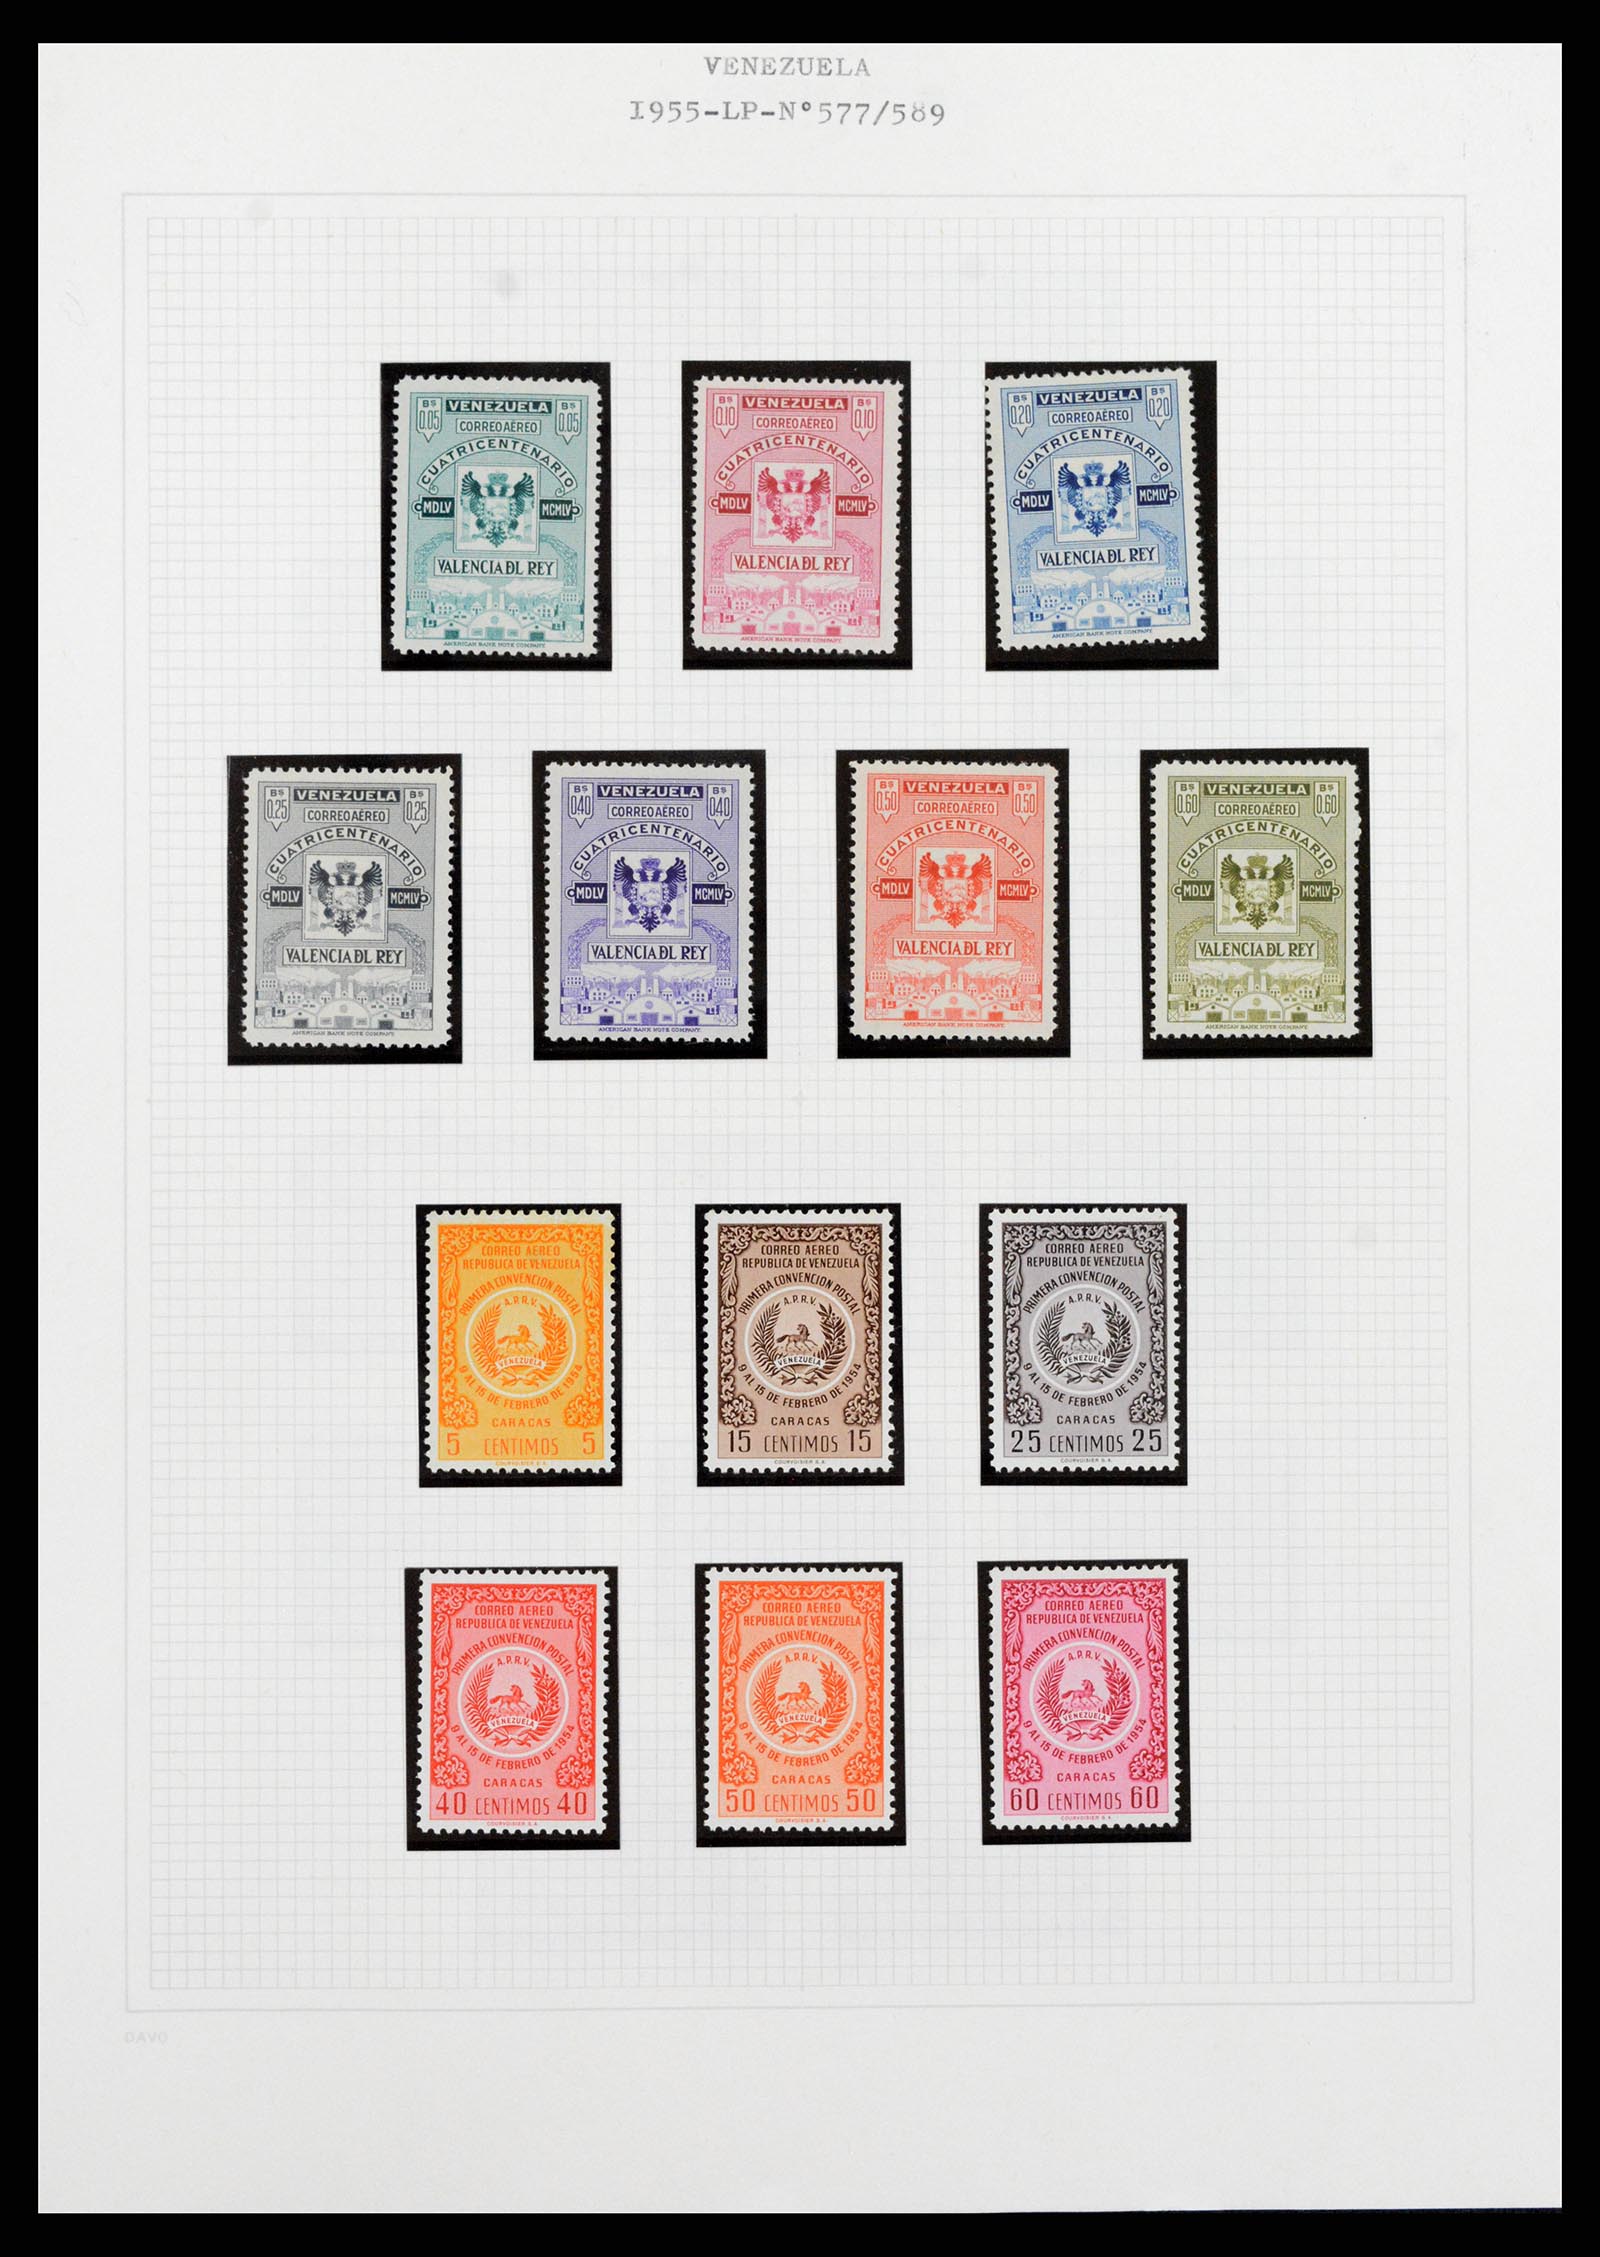 37353 089 - Stamp collection 37353 Venezuela 1880-1960.